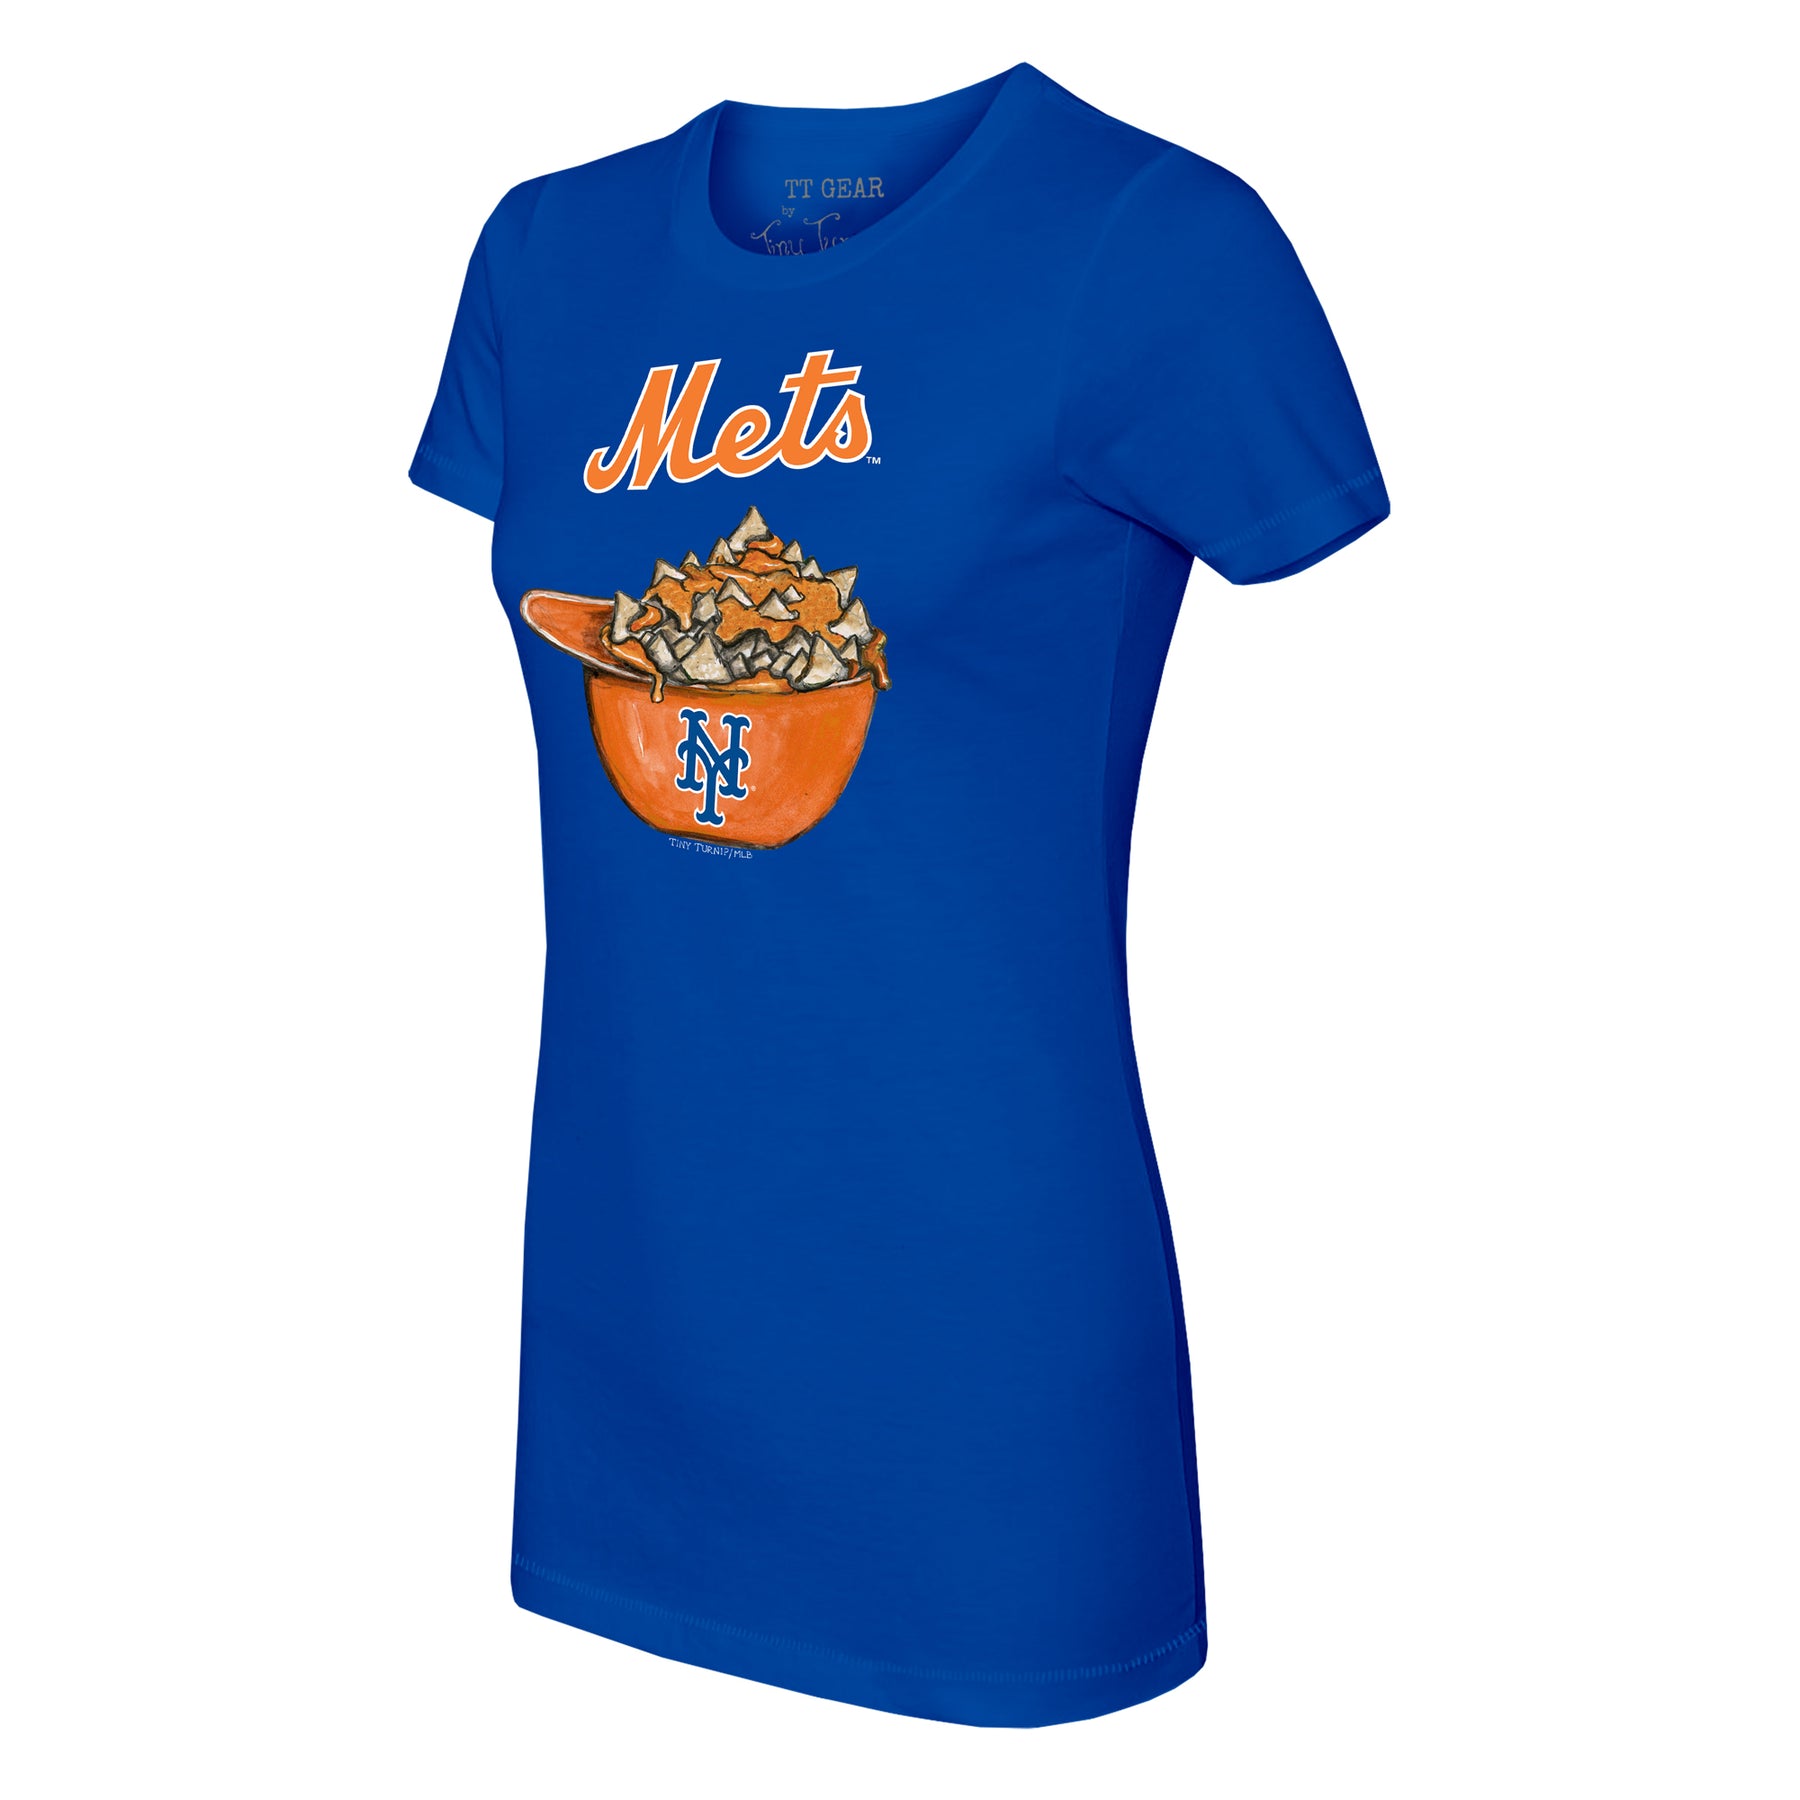 New York Mets Shirts, Mets Tees, Mets T-Shirts